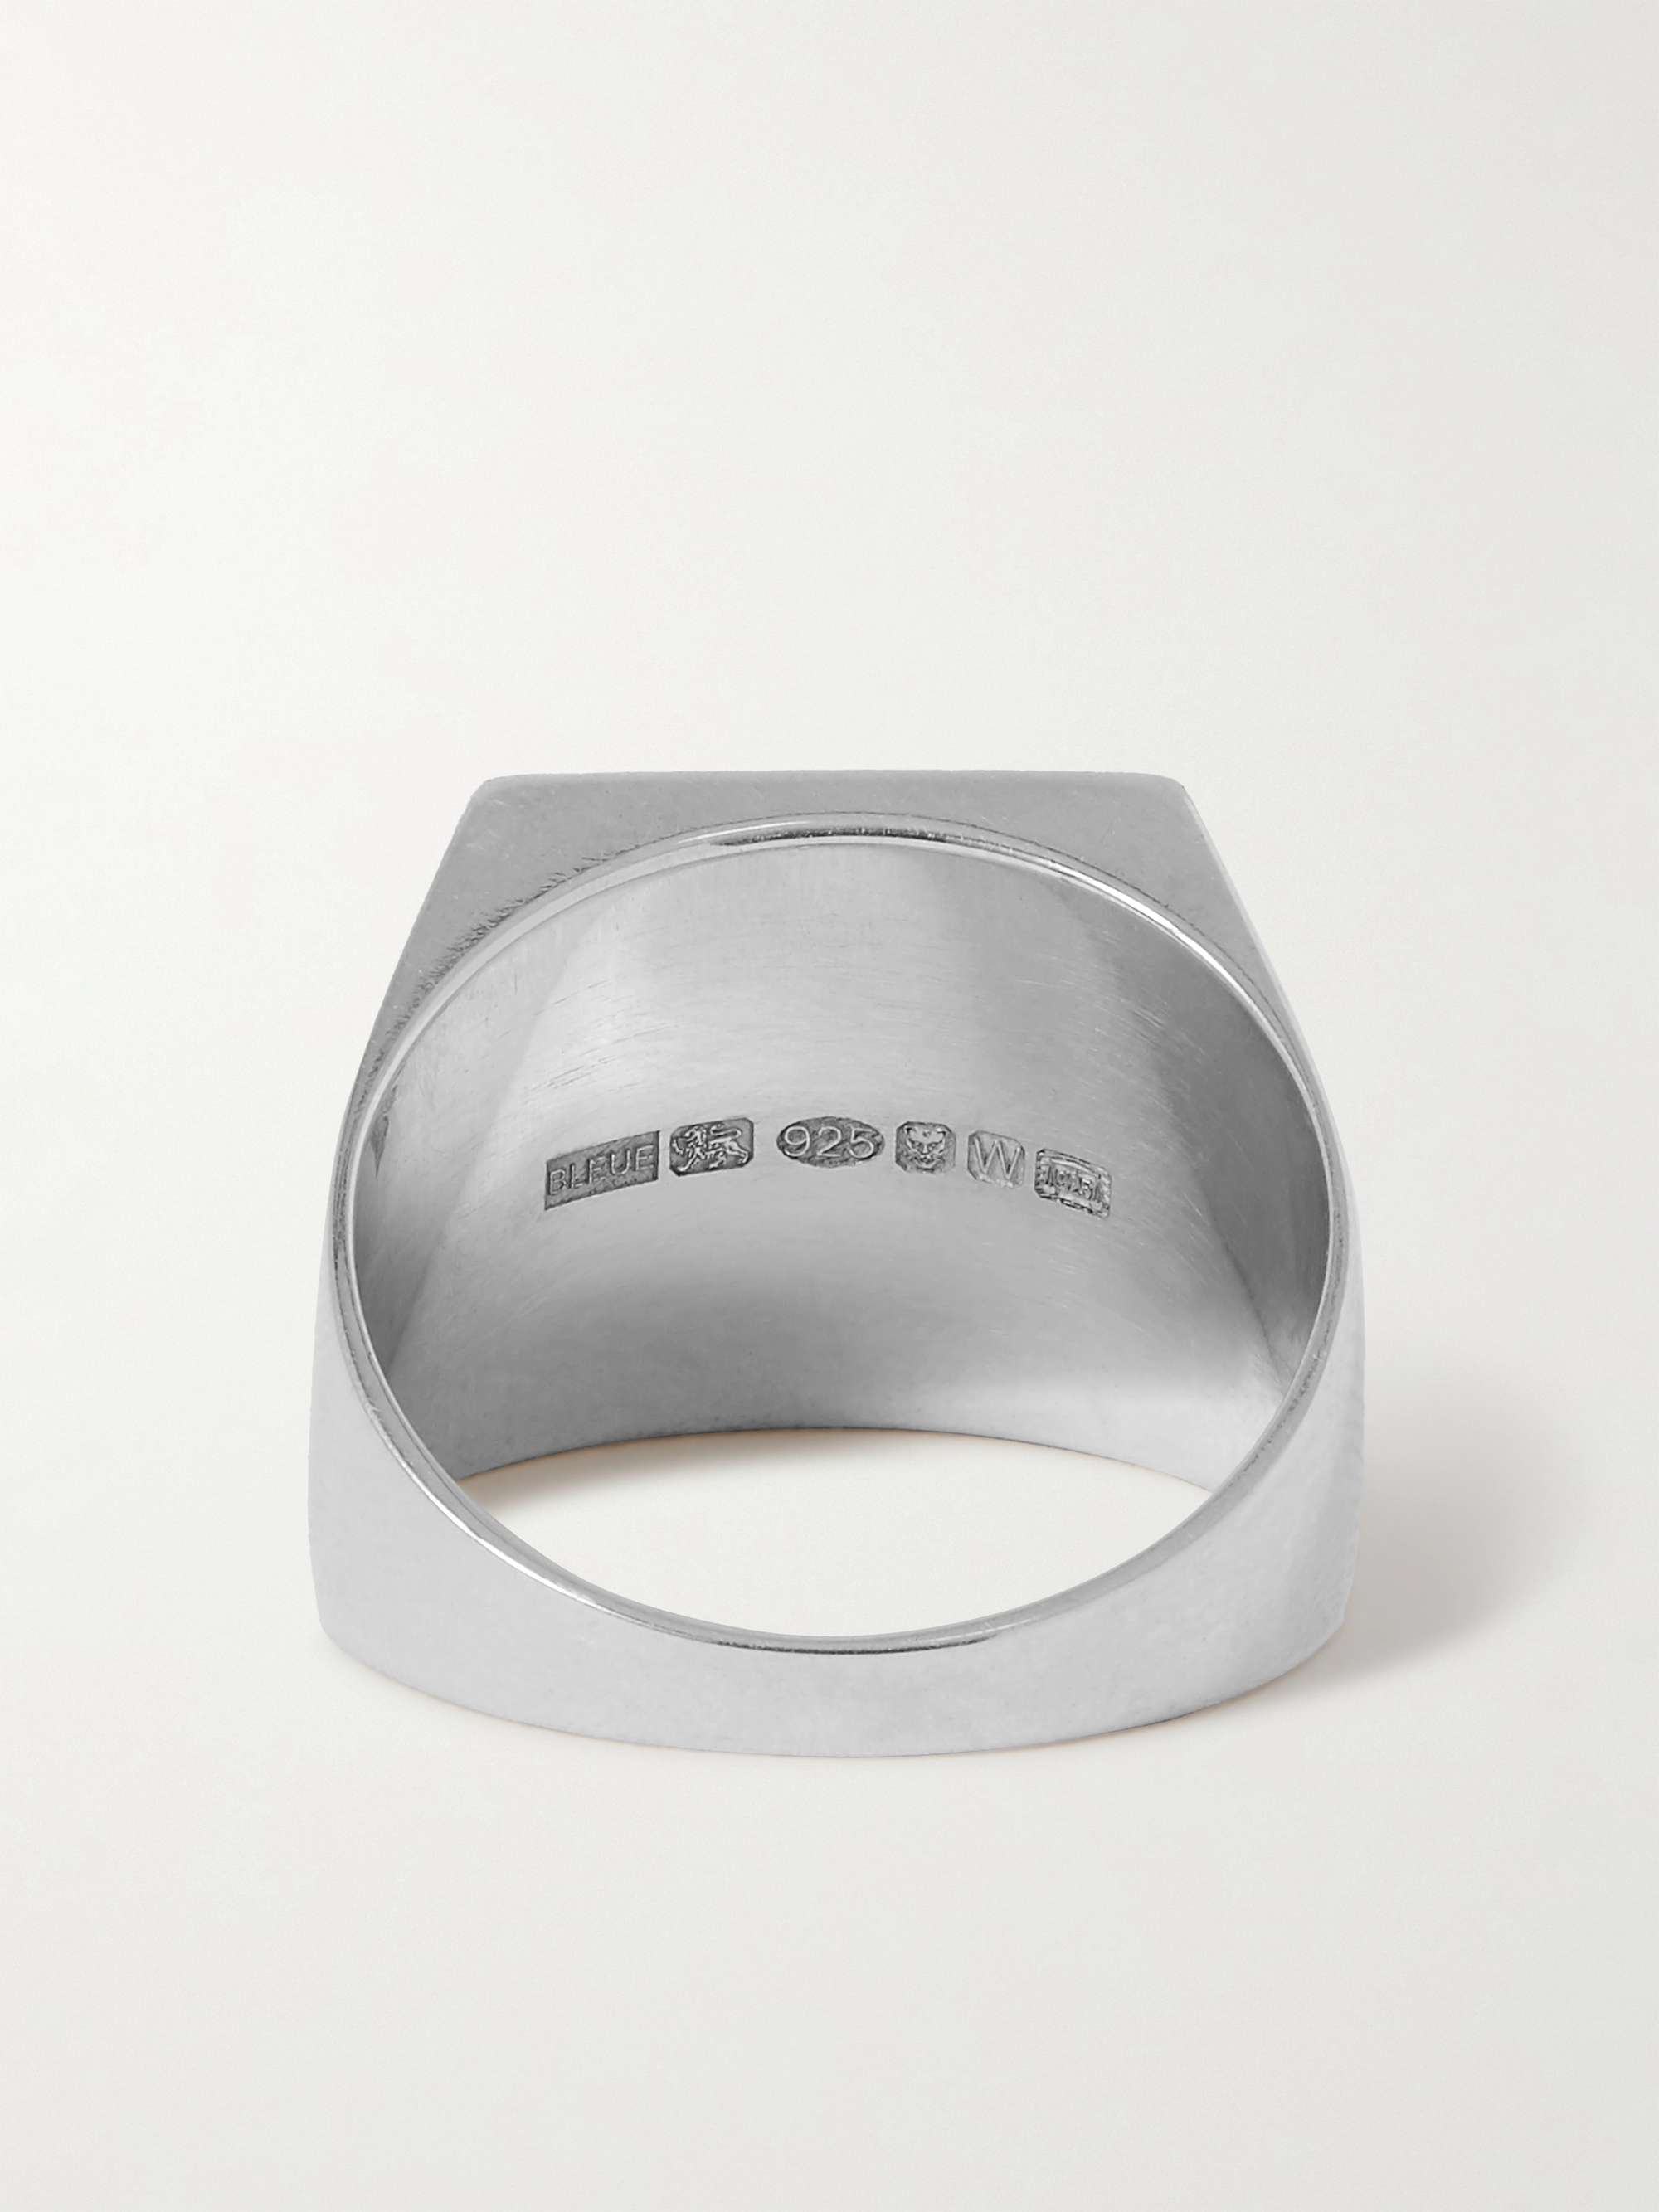 BLEUE BURNHAM Drink Tea Engraved Recycled Sterling Silver Signet Ring